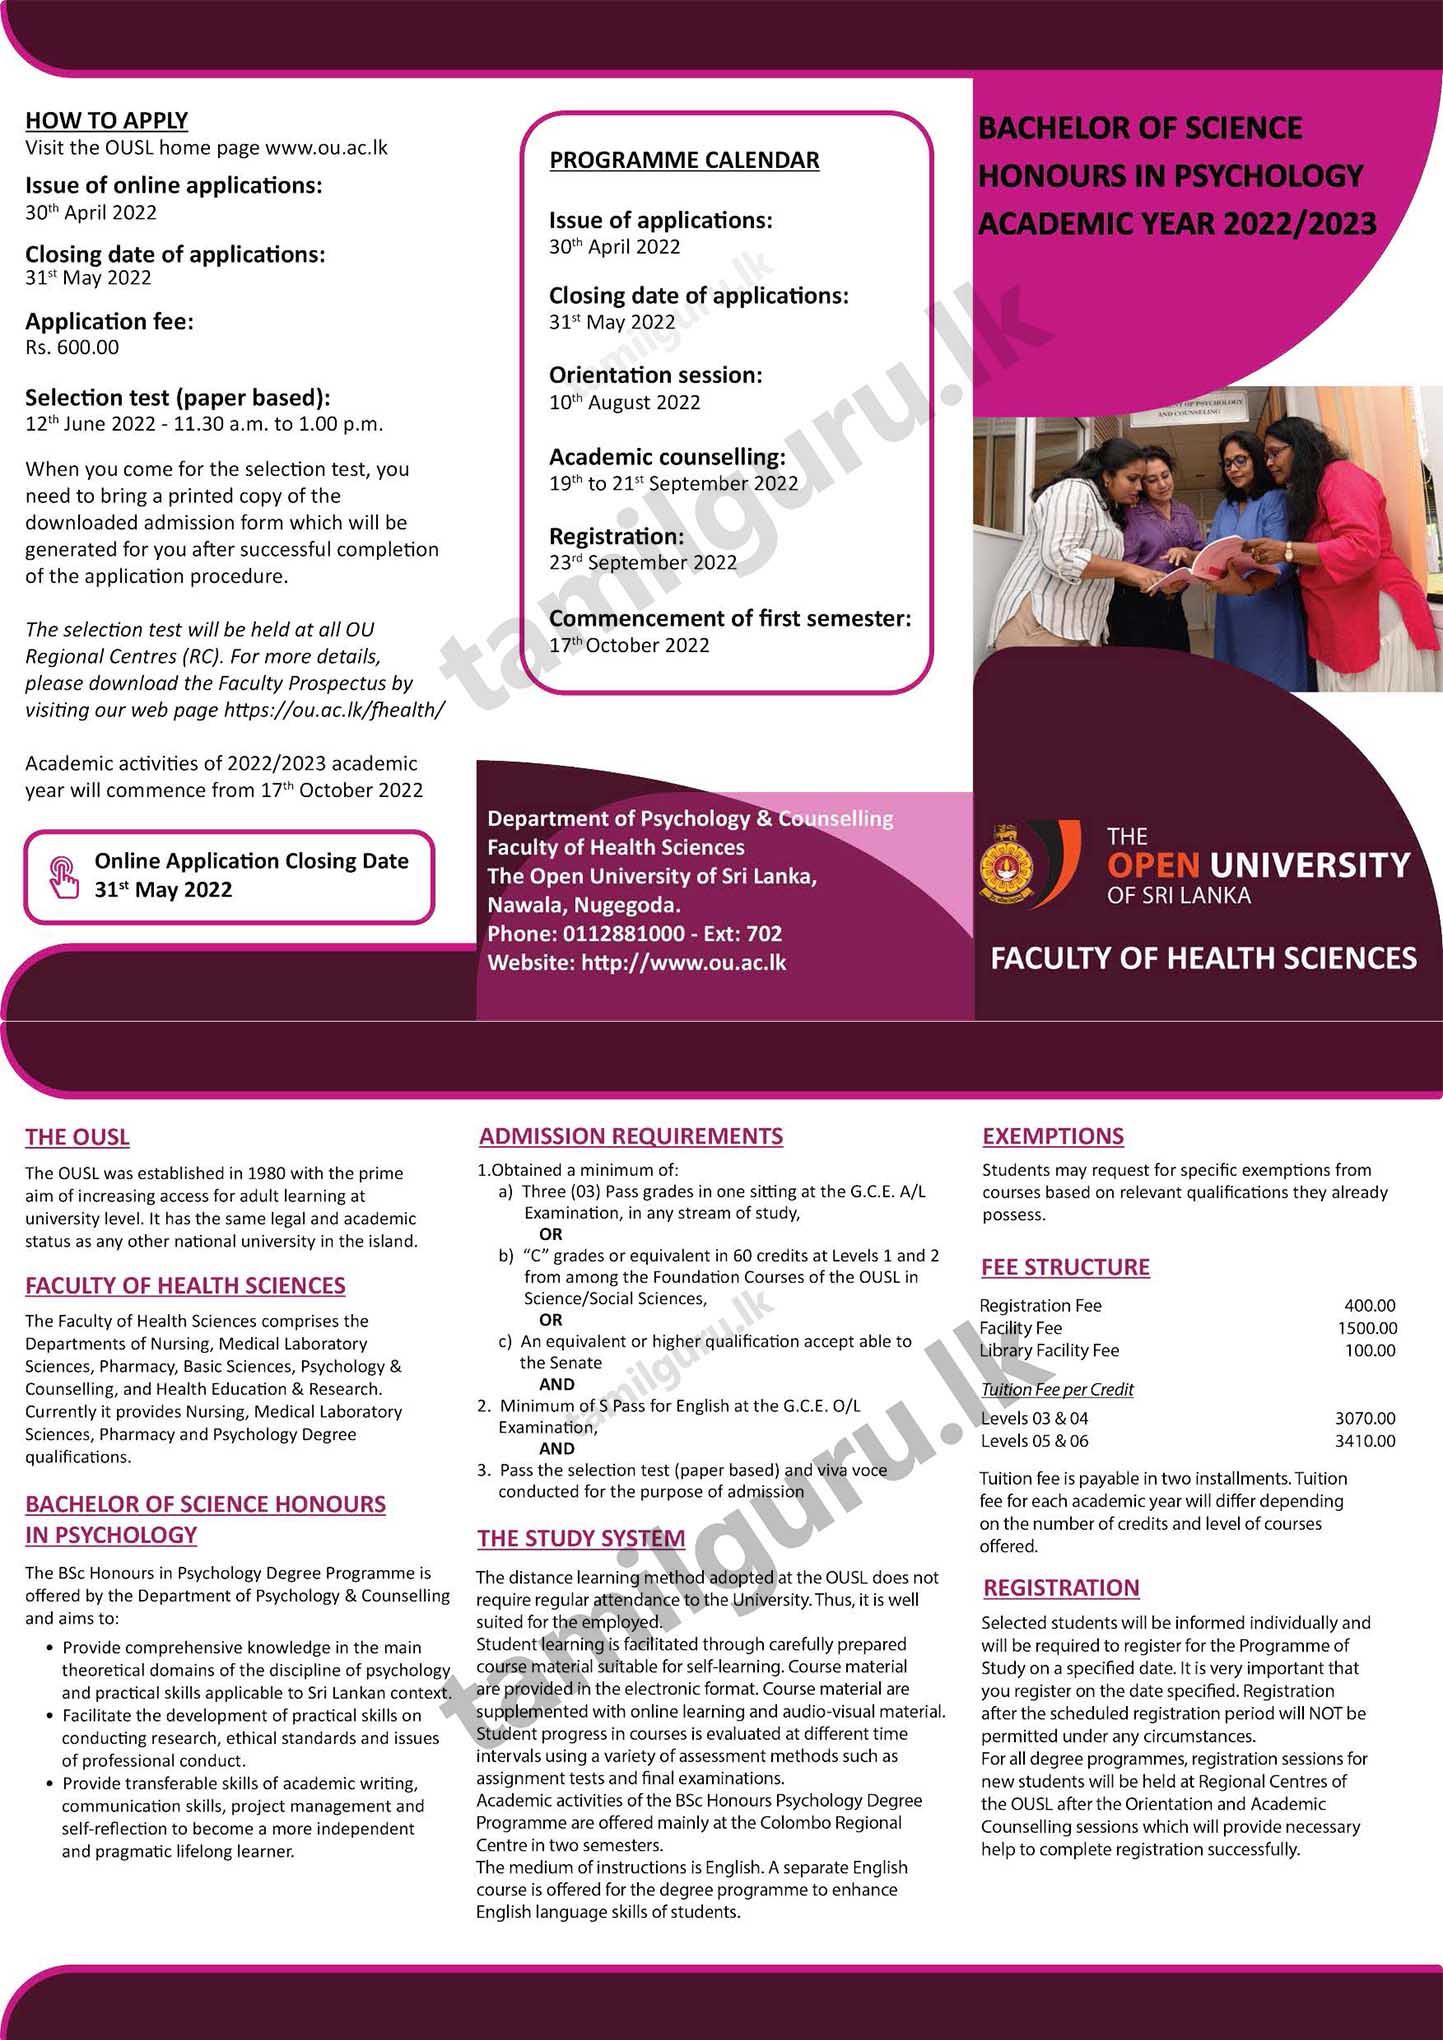 Bachelor of Science (BSc) in Psychology Degree Programme 2022/2023 - The Open University of Sri Lanka